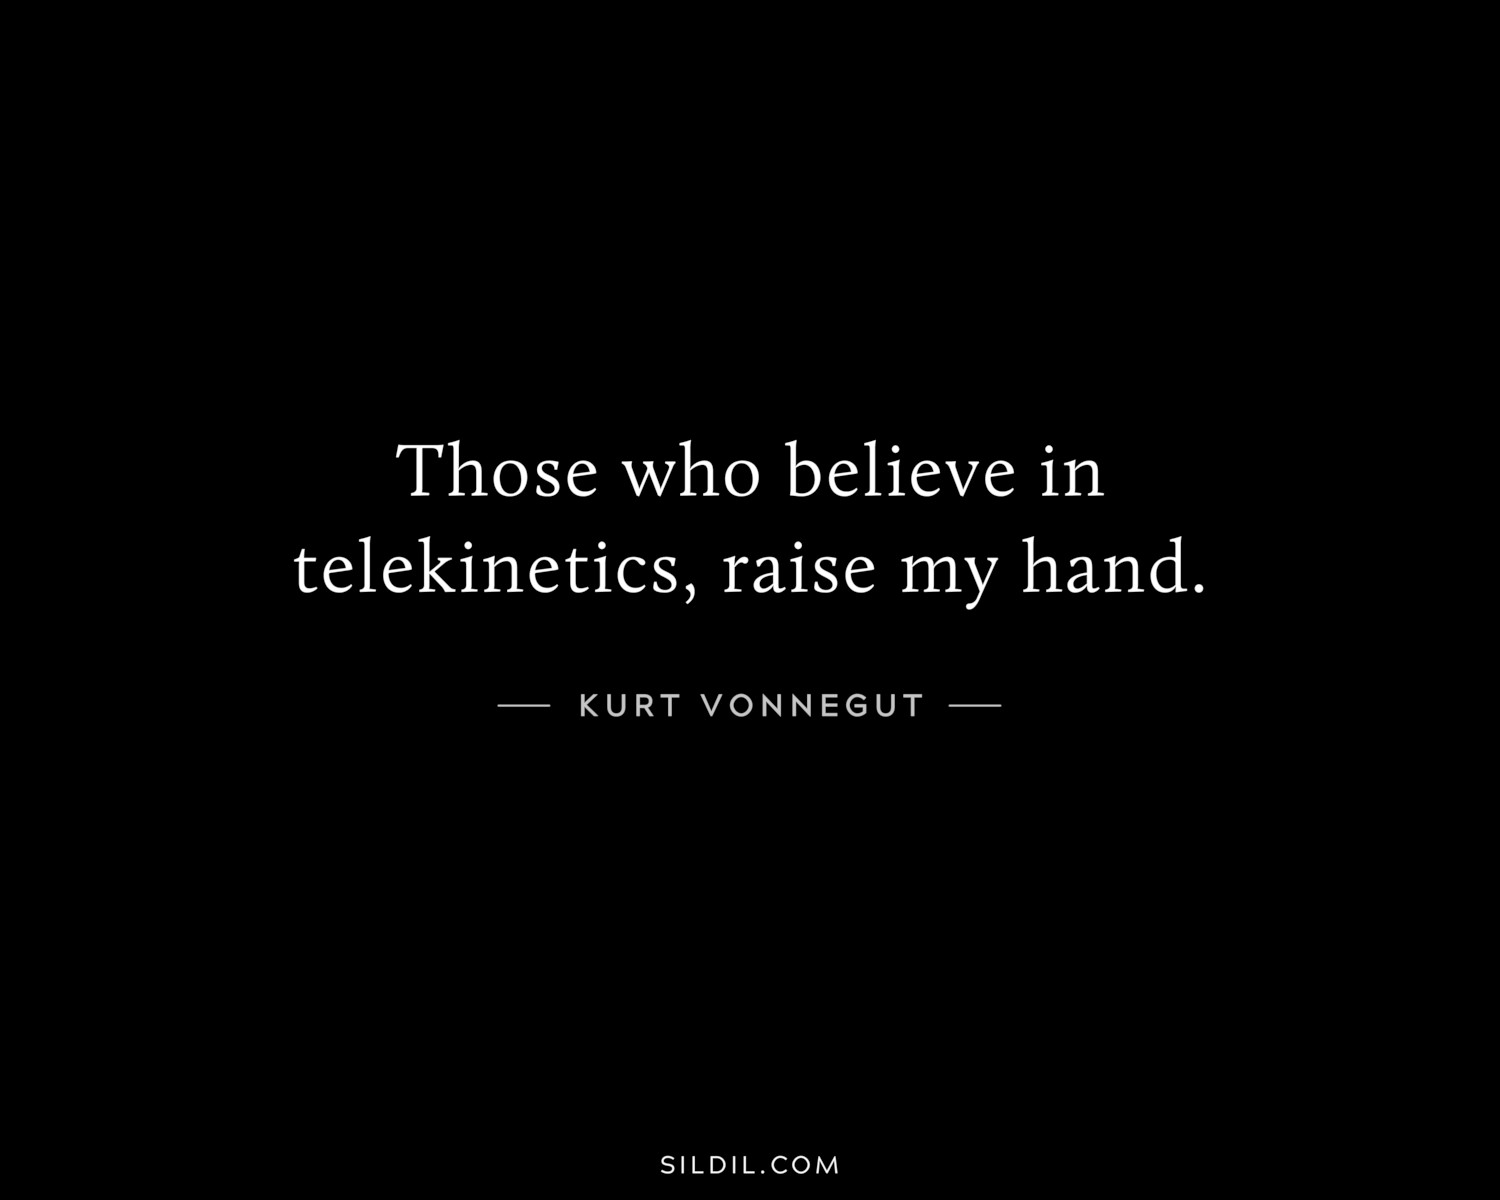 Those who believe in telekinetics, raise my hand.